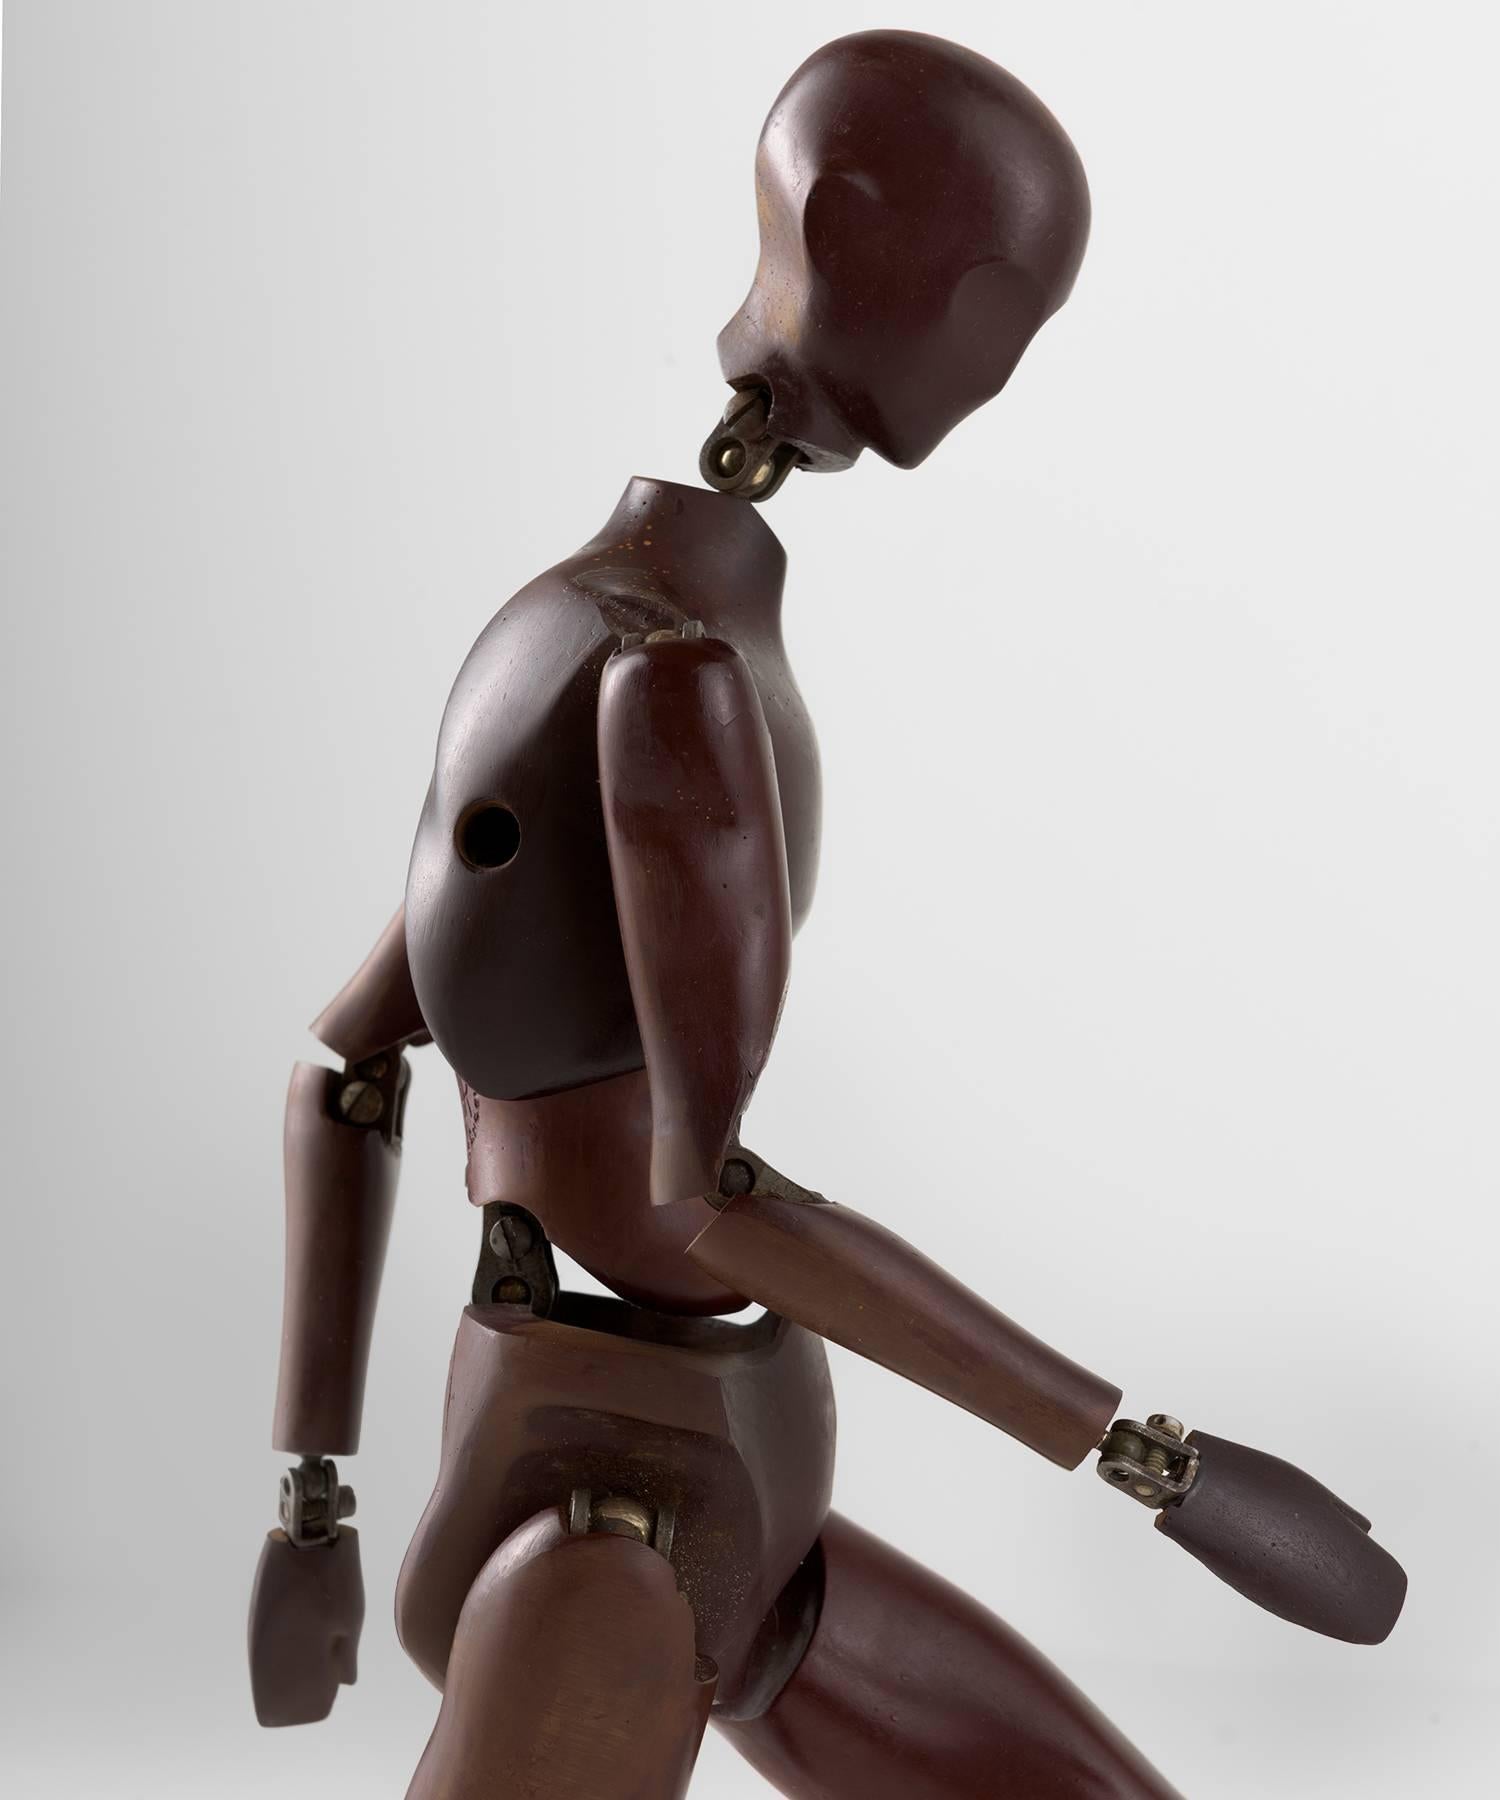 Molded Atsco “Oscar” Artist Mannequin